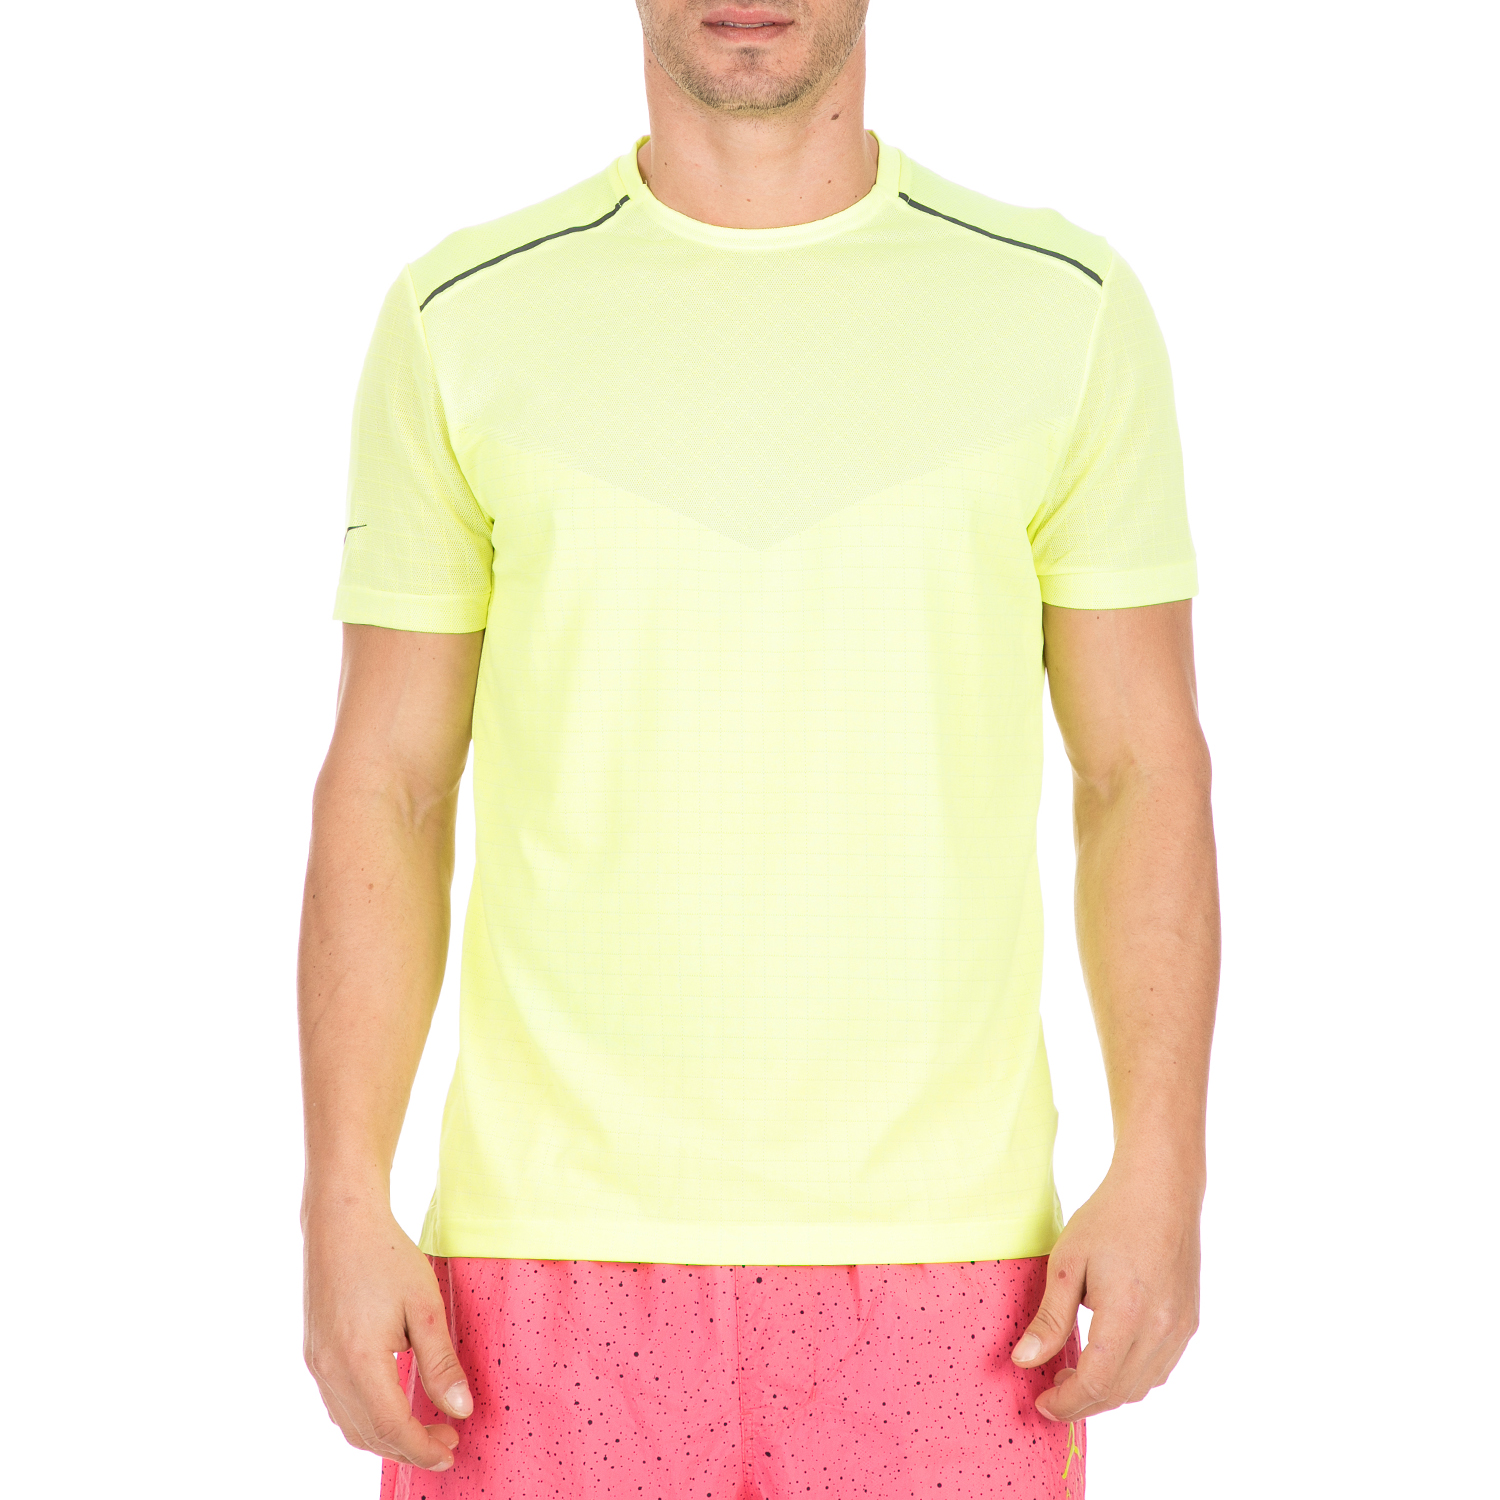 NIKE - Ανδρικό t-shirt Nike Running κίτρινο Ανδρικά/Ρούχα/Αθλητικά/T-shirt